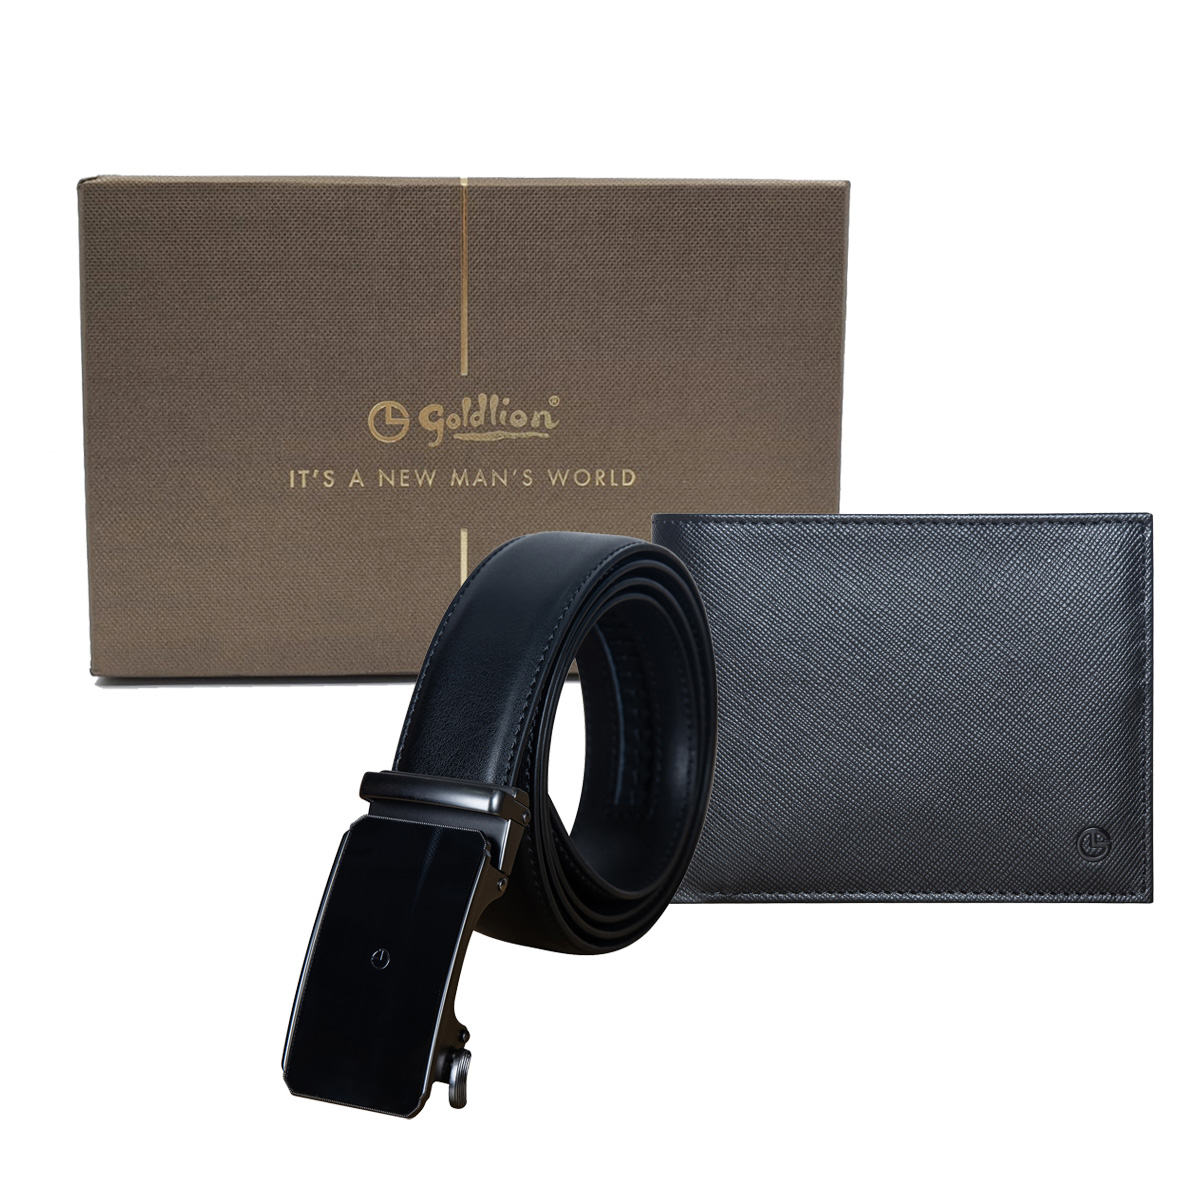 [Online Exclusive] Goldlion Genuine Leather RFID Wallet & Auto Lock Belt Gift Set (9 Cards Slot, Black Colour)